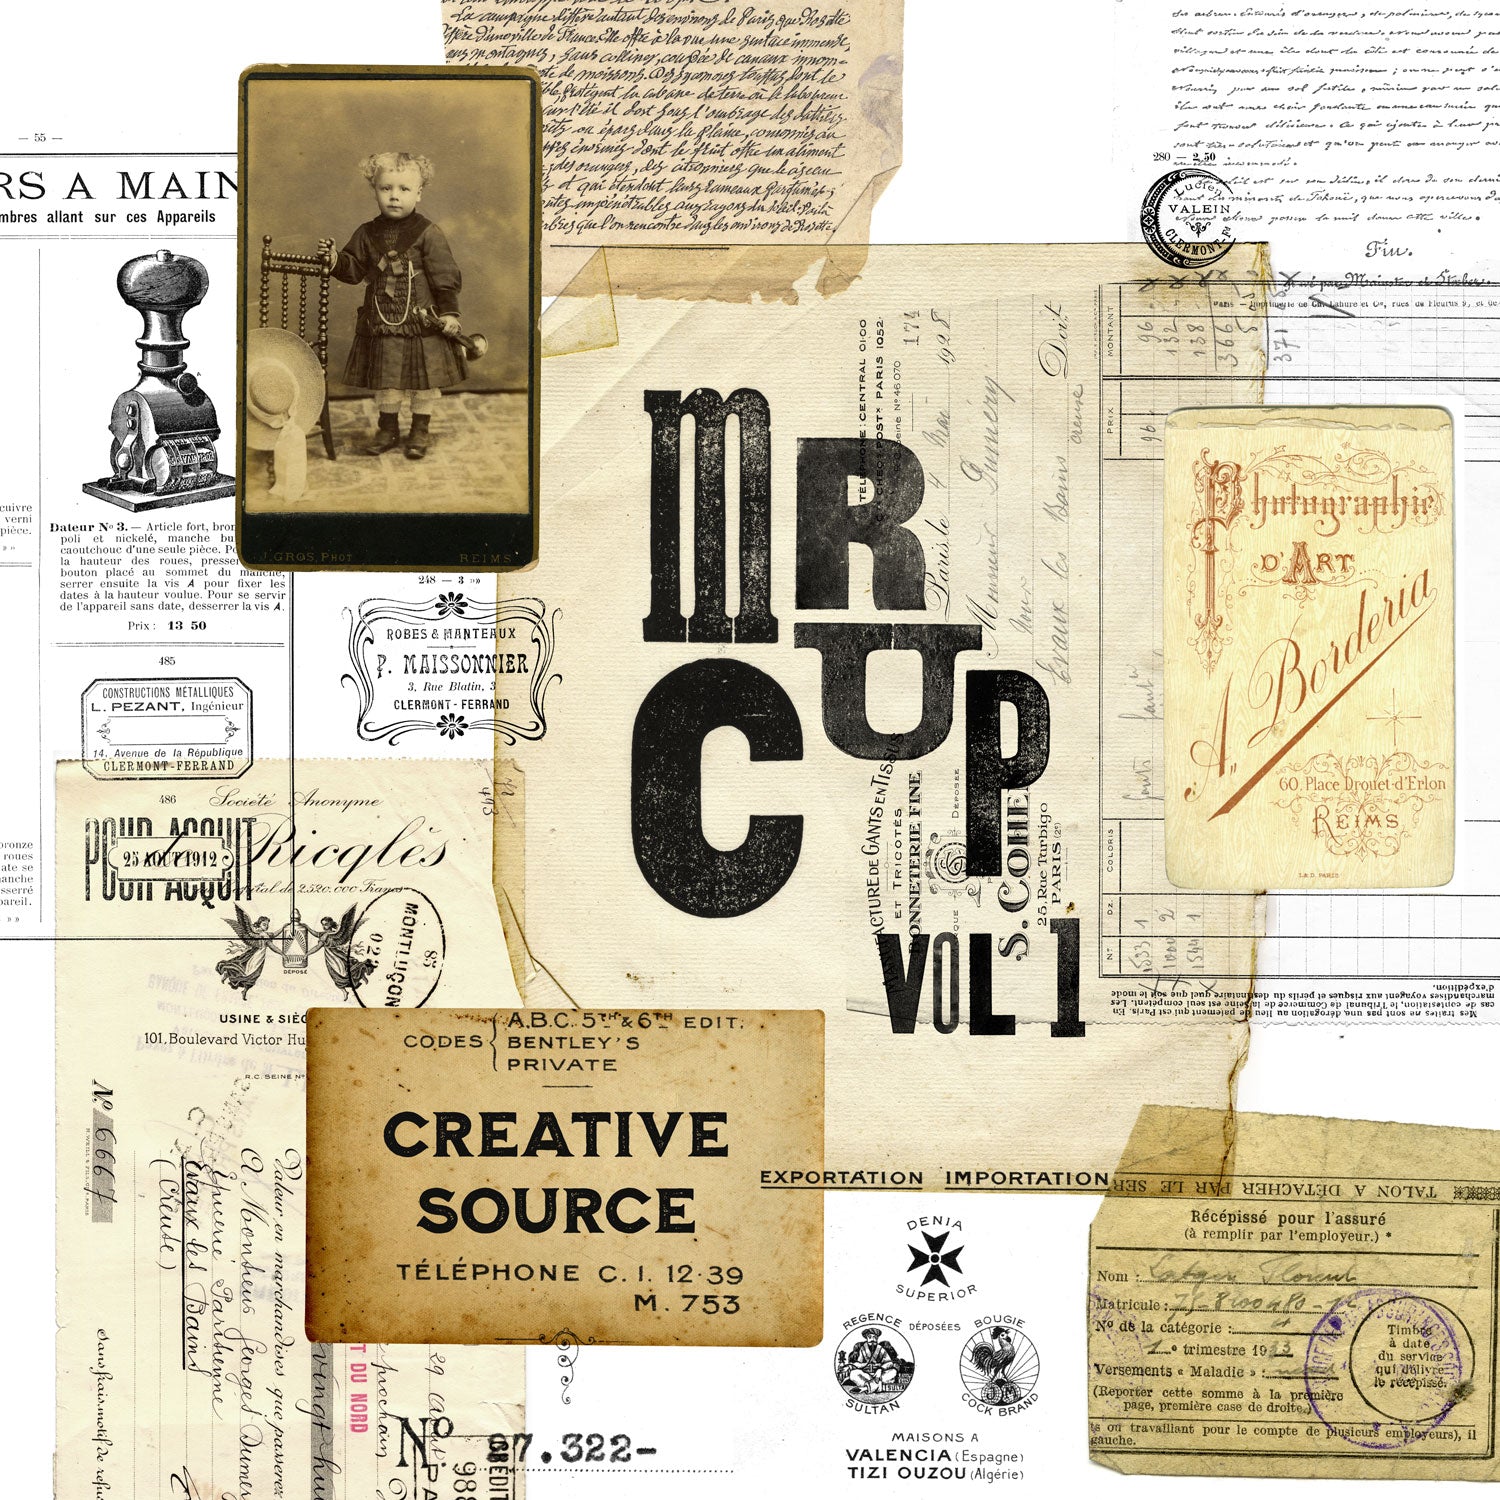 Mr Cup Creative Source . Vol 1 - MR CUP